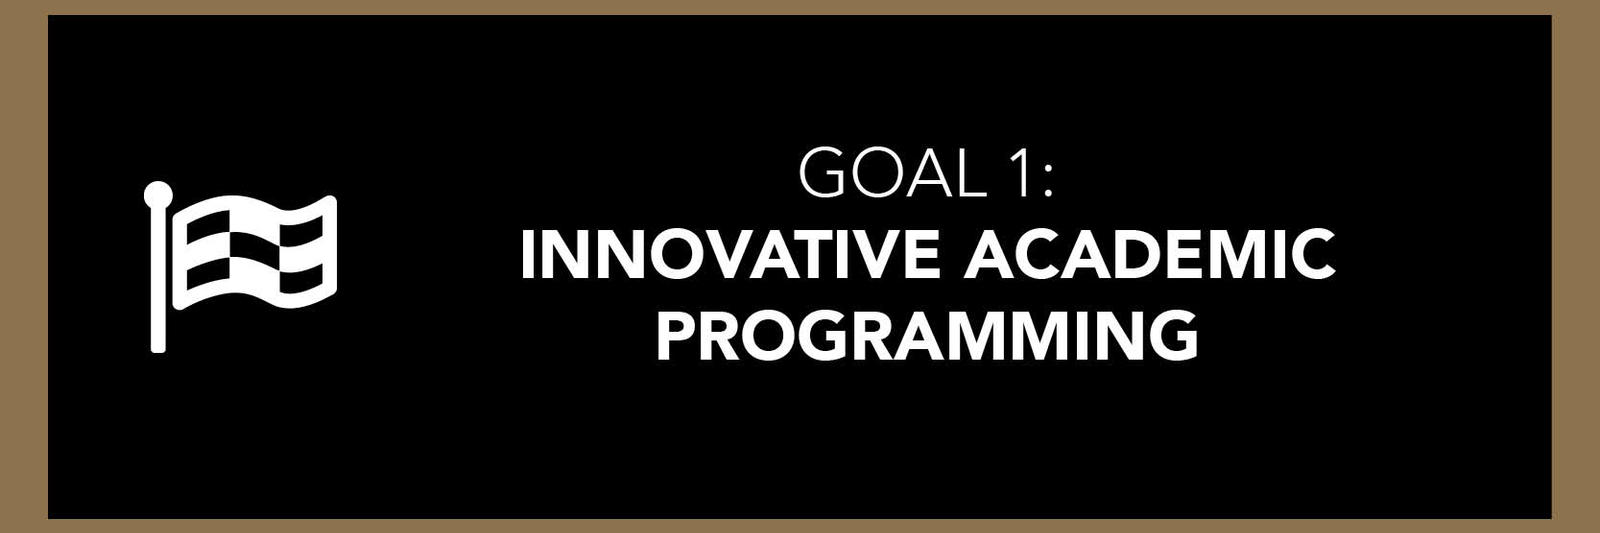 goal 1: innovative academic programming